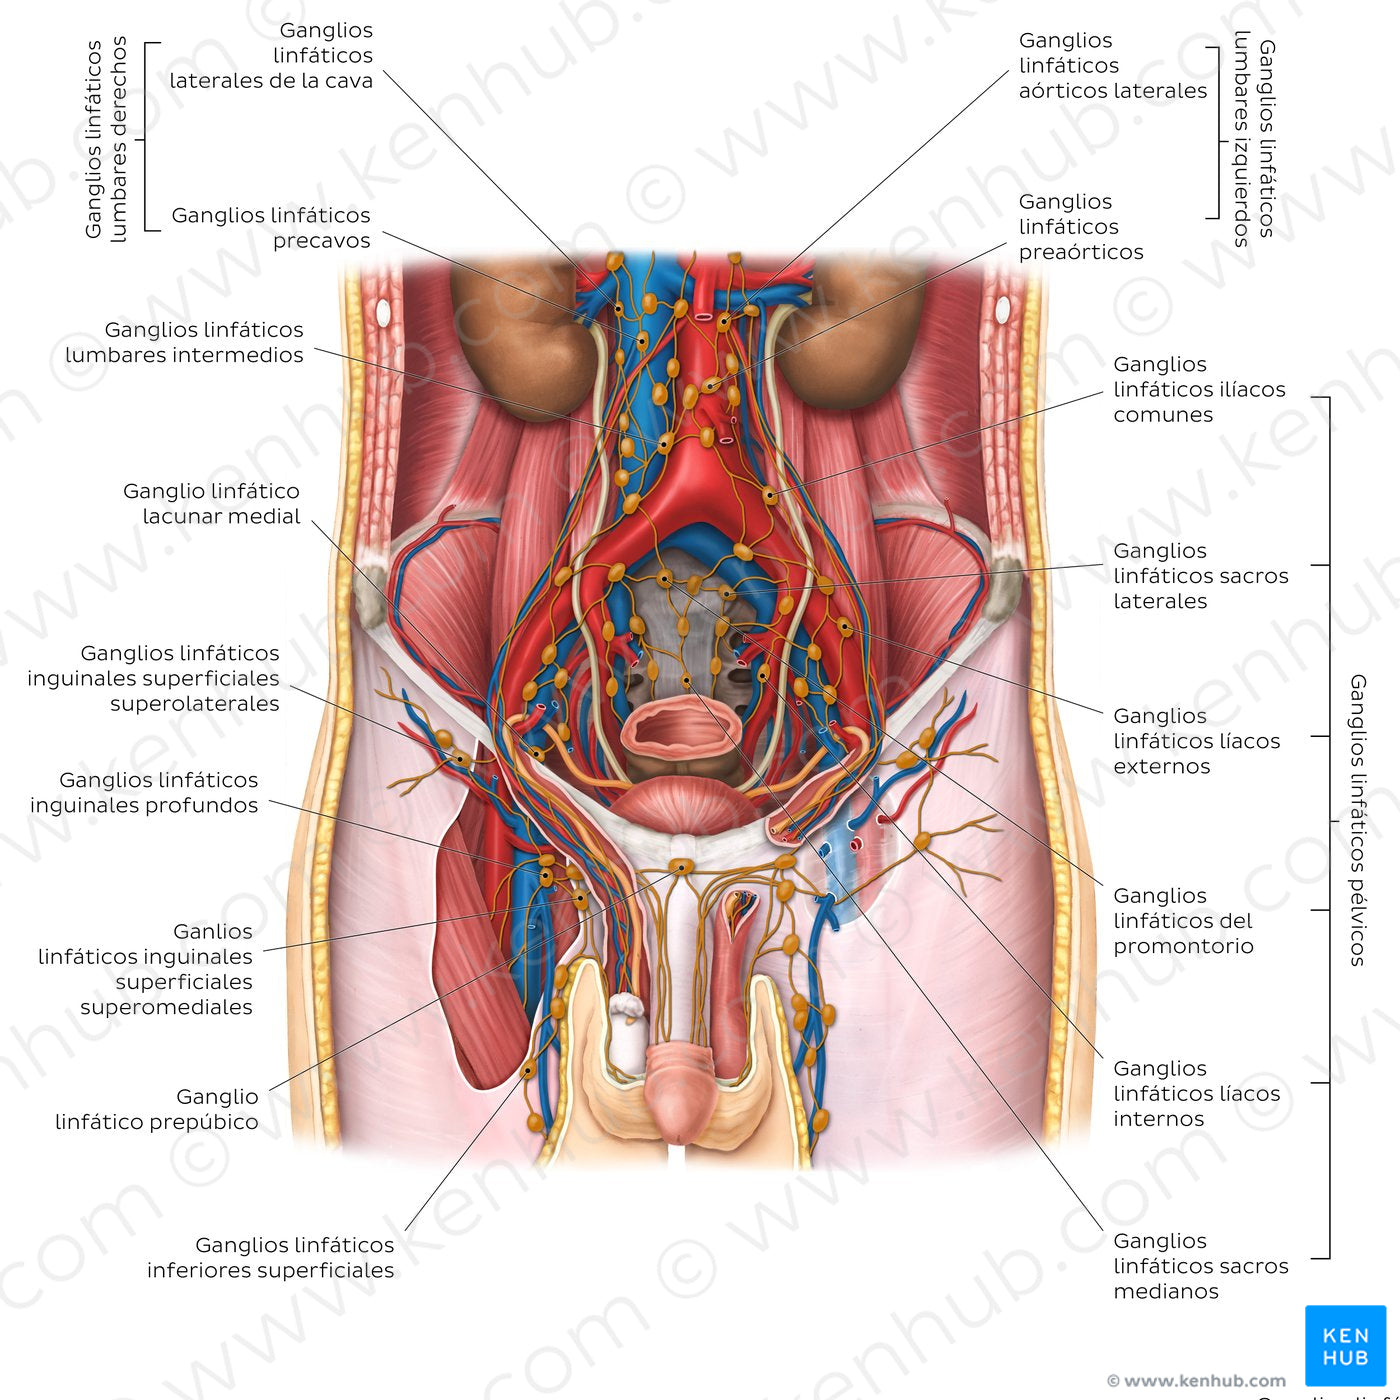 Lymphatics of the male genitalia (Spanish)